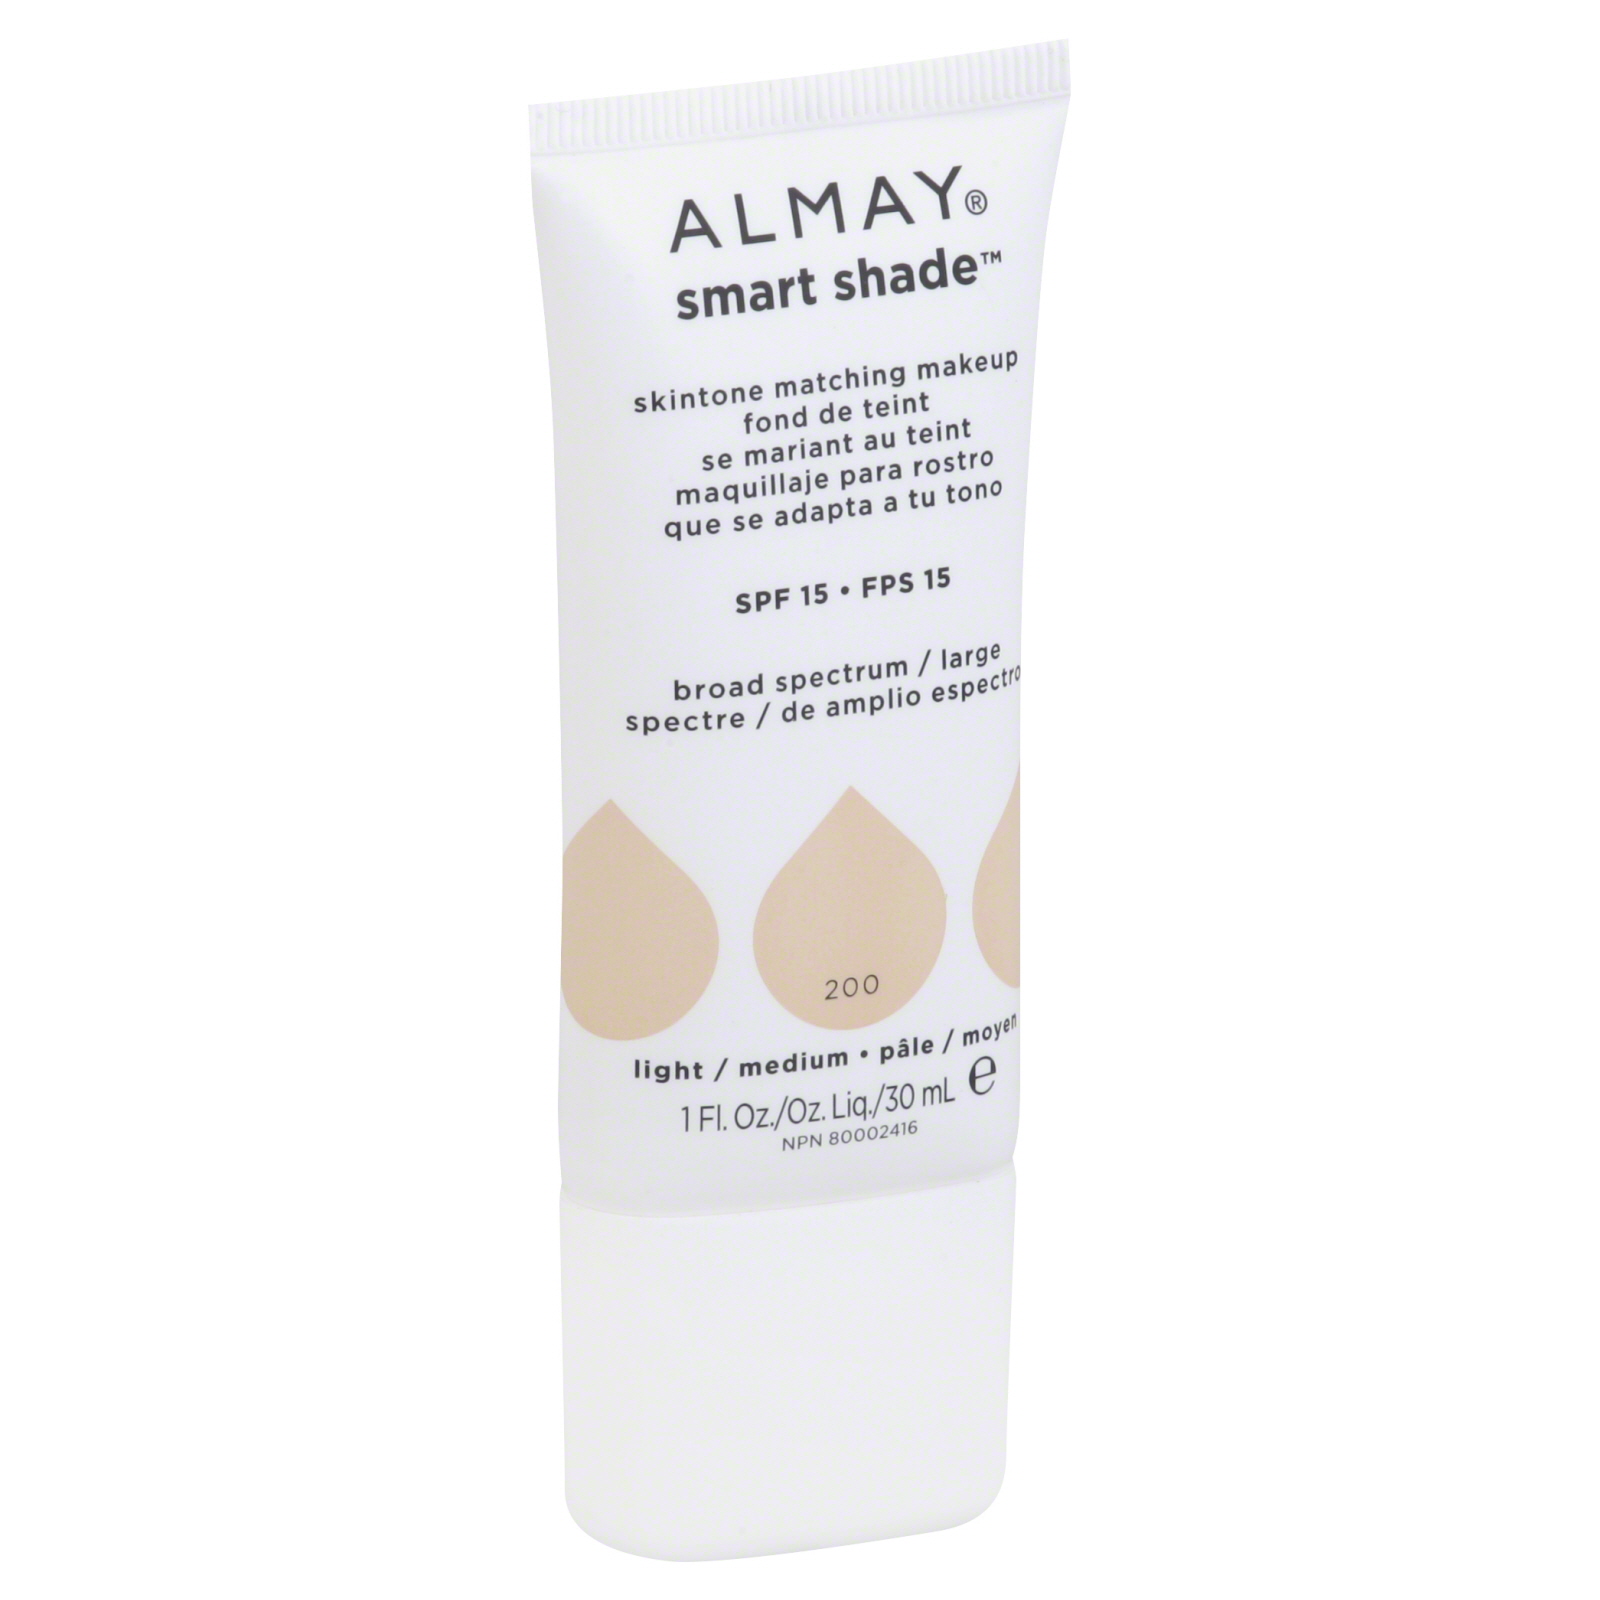 Almay Skintone Matching Makeup, Light/Medium, 1 fl oz (30 ml)